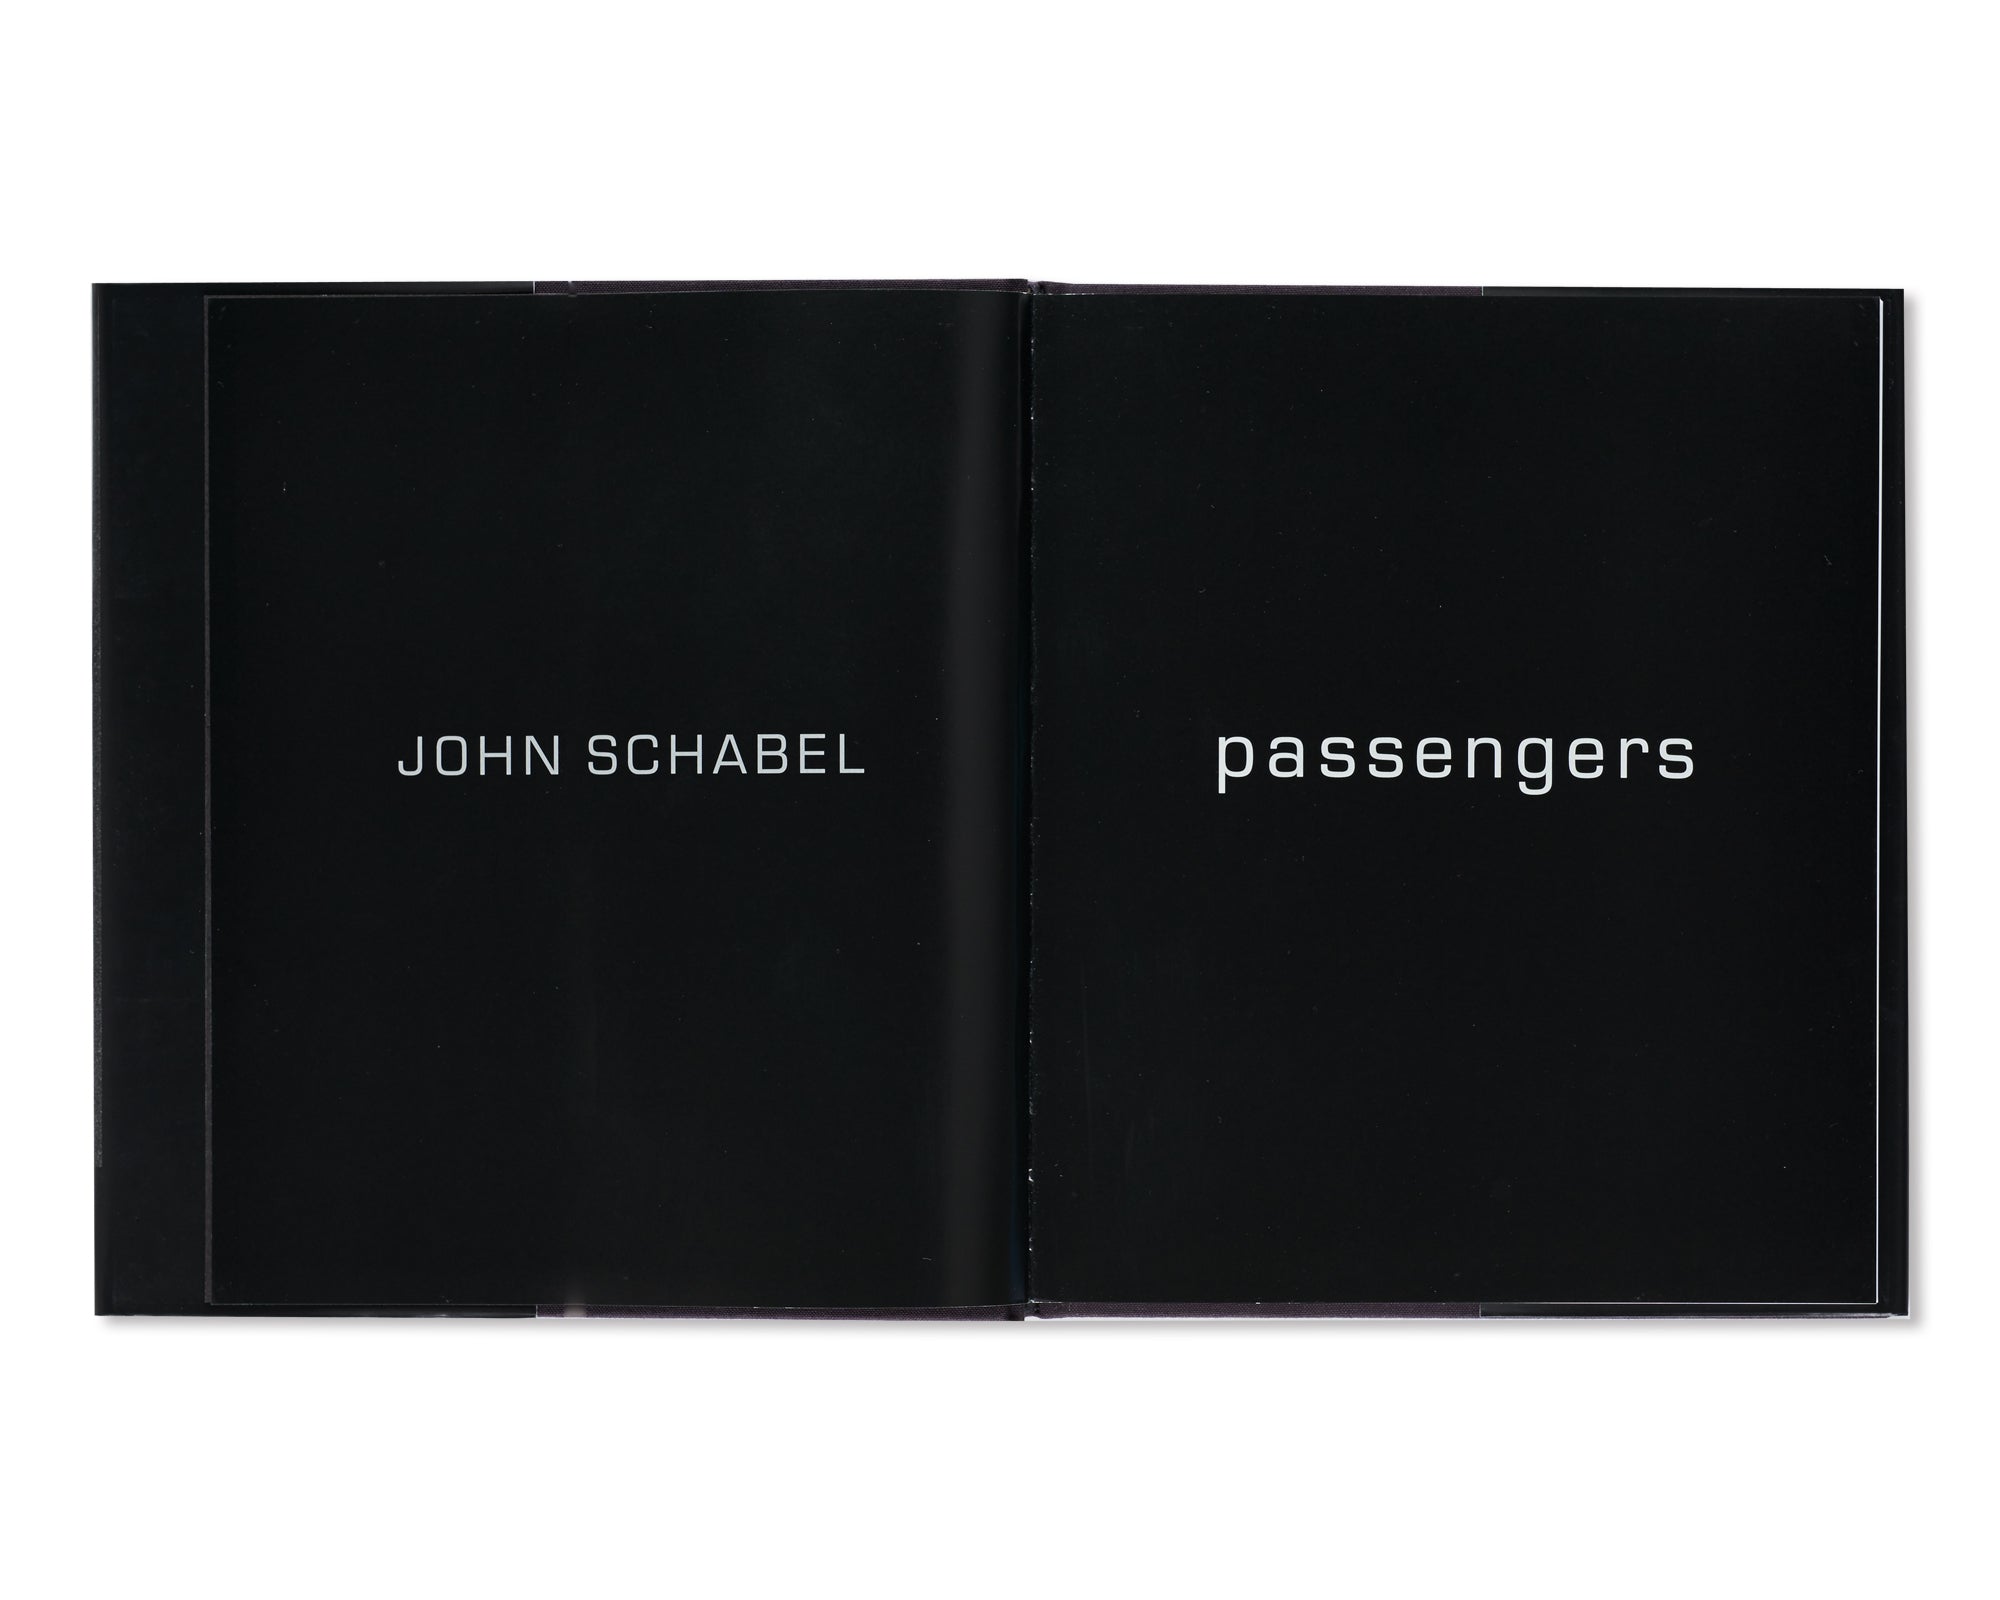 PASSENGERS by John Schabel